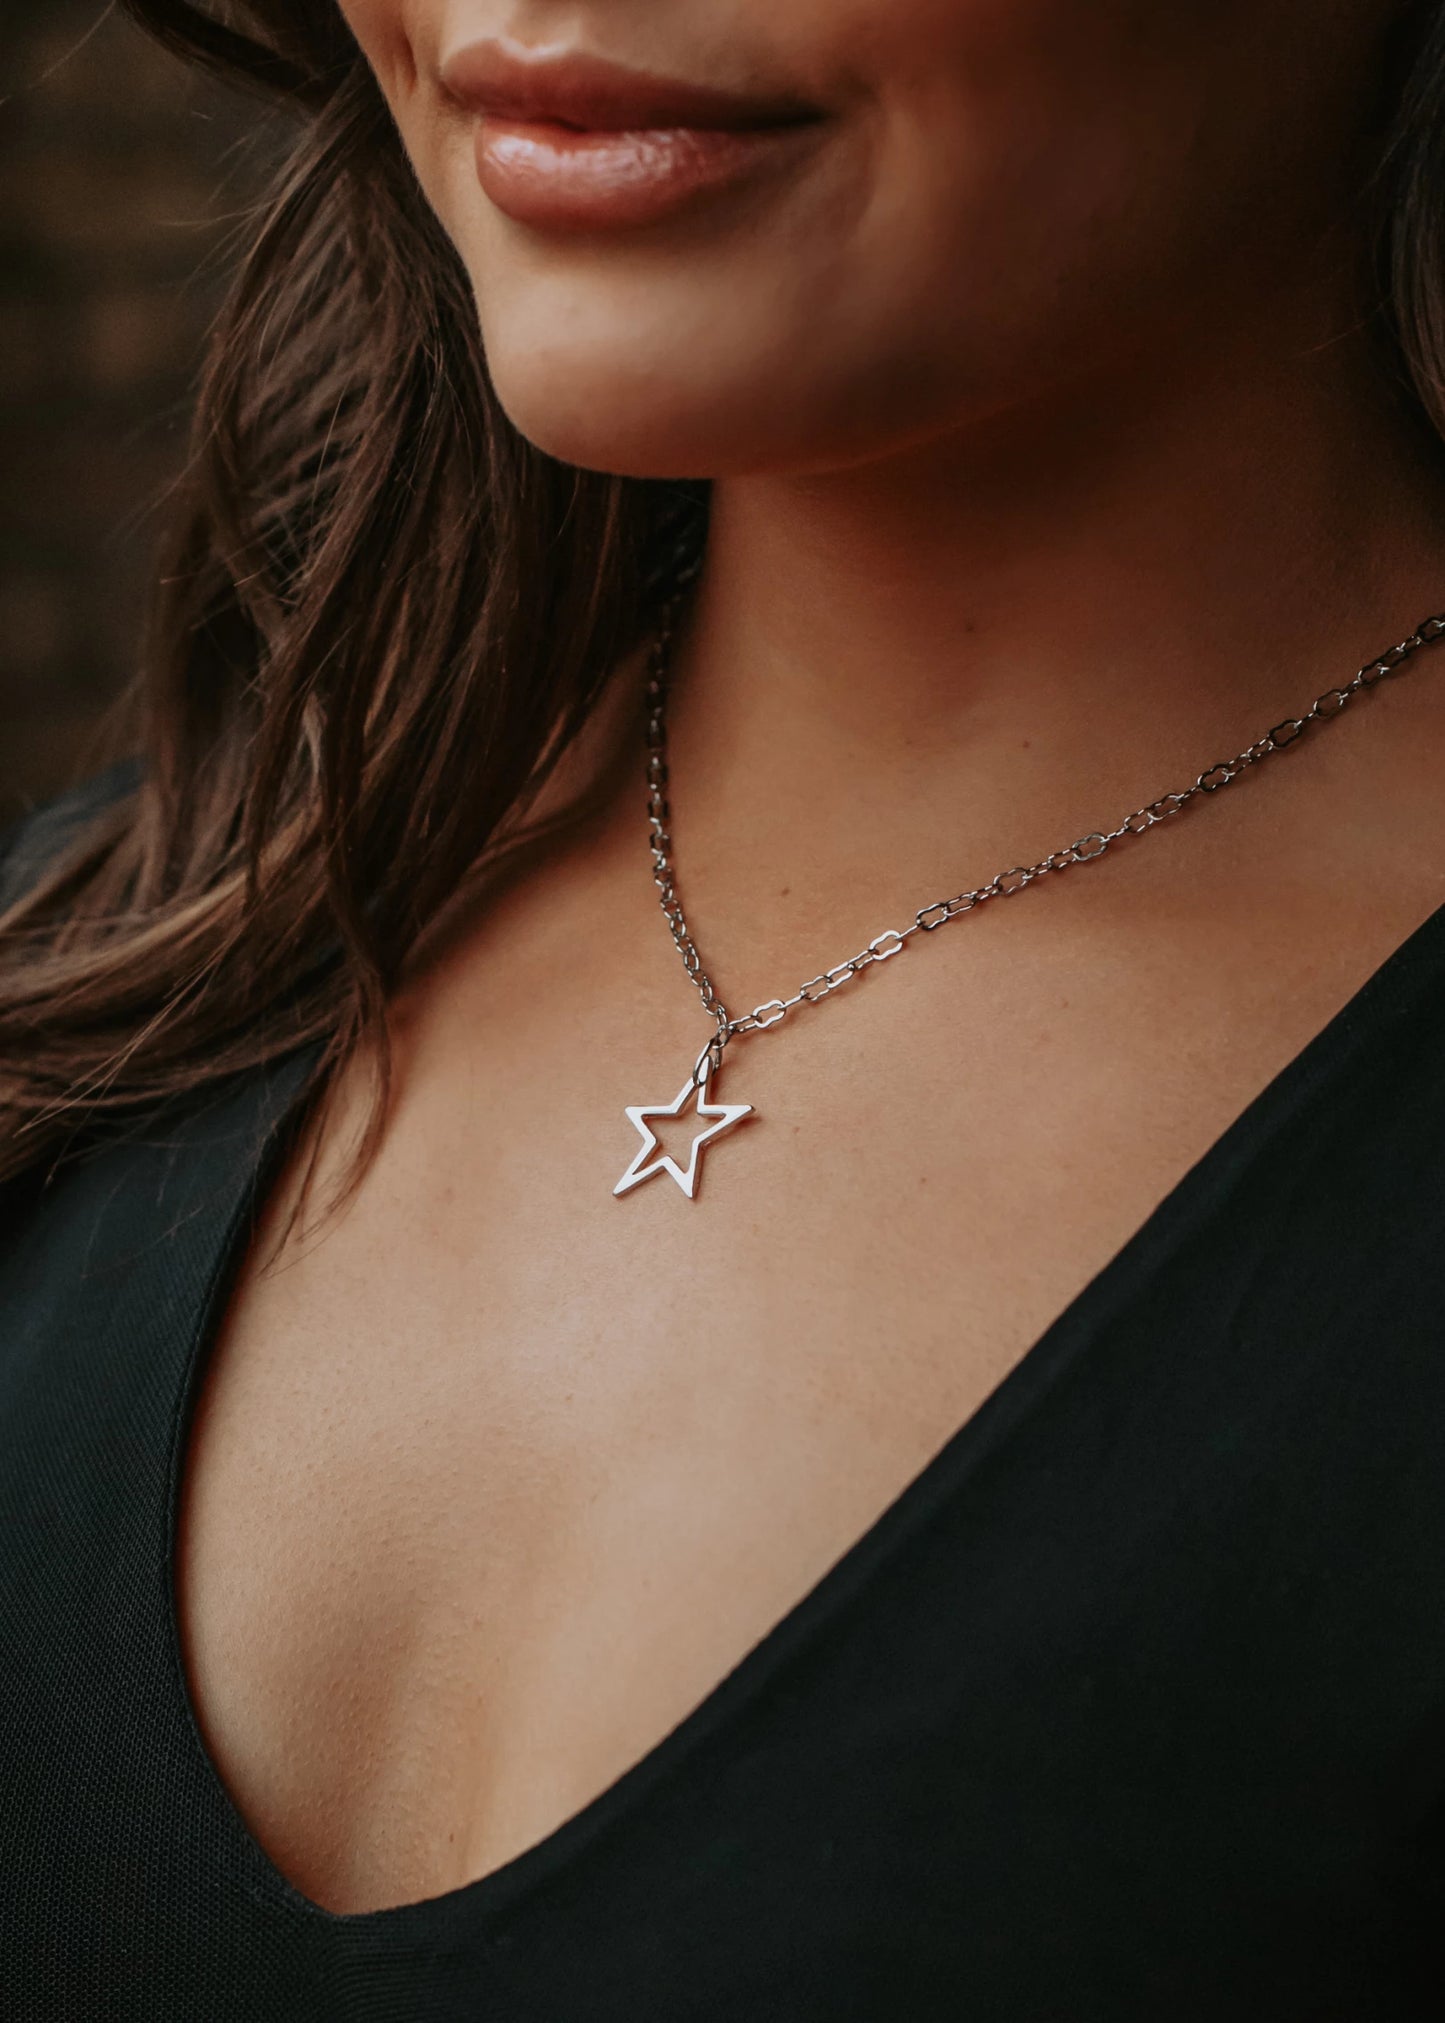 Silver Chain Necklace w/ Star Pendant